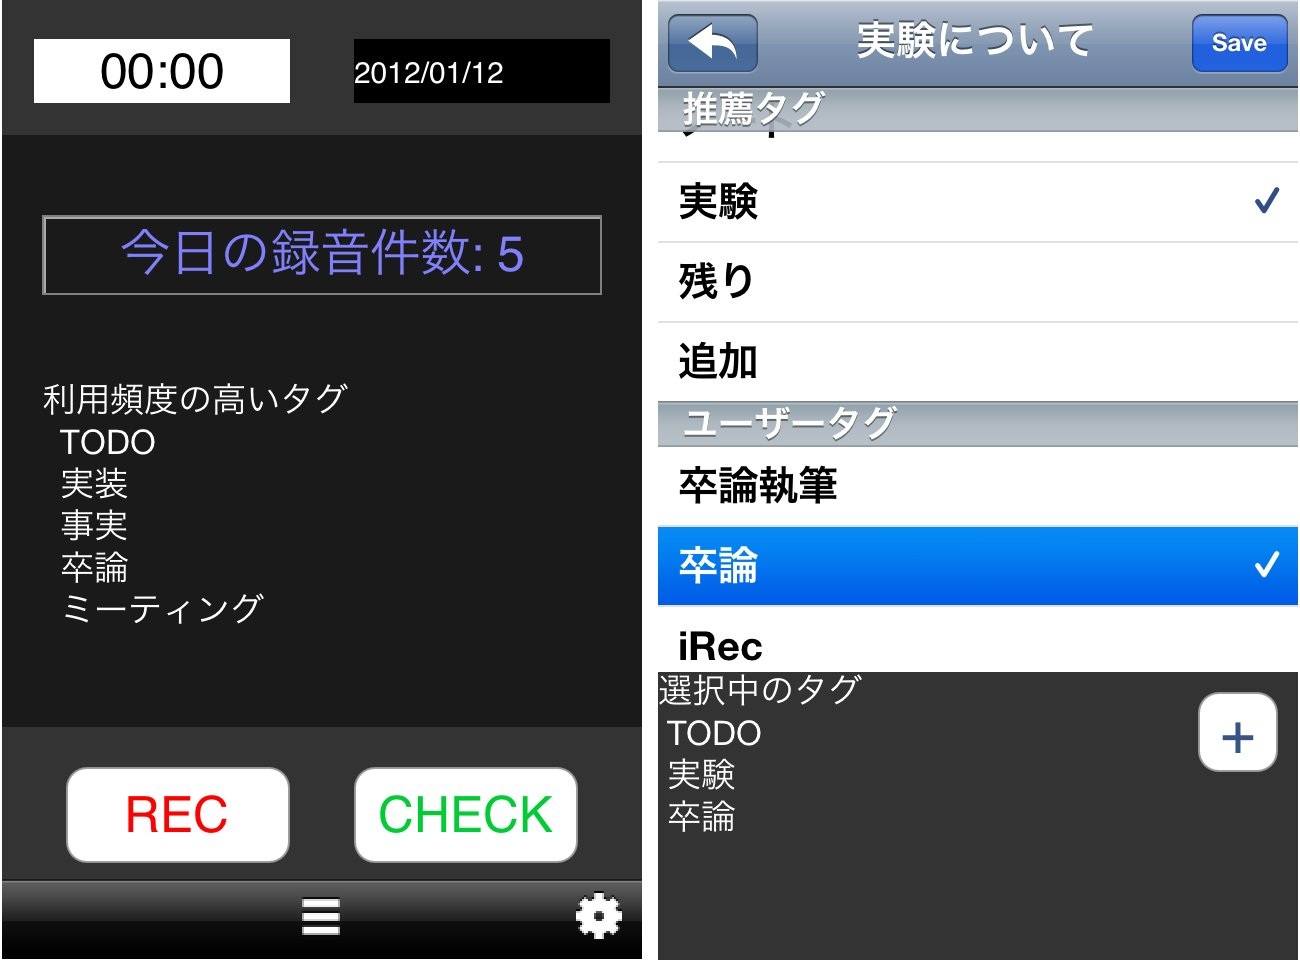 iRecの録音画面(左)とタグ選択画面(右)
  